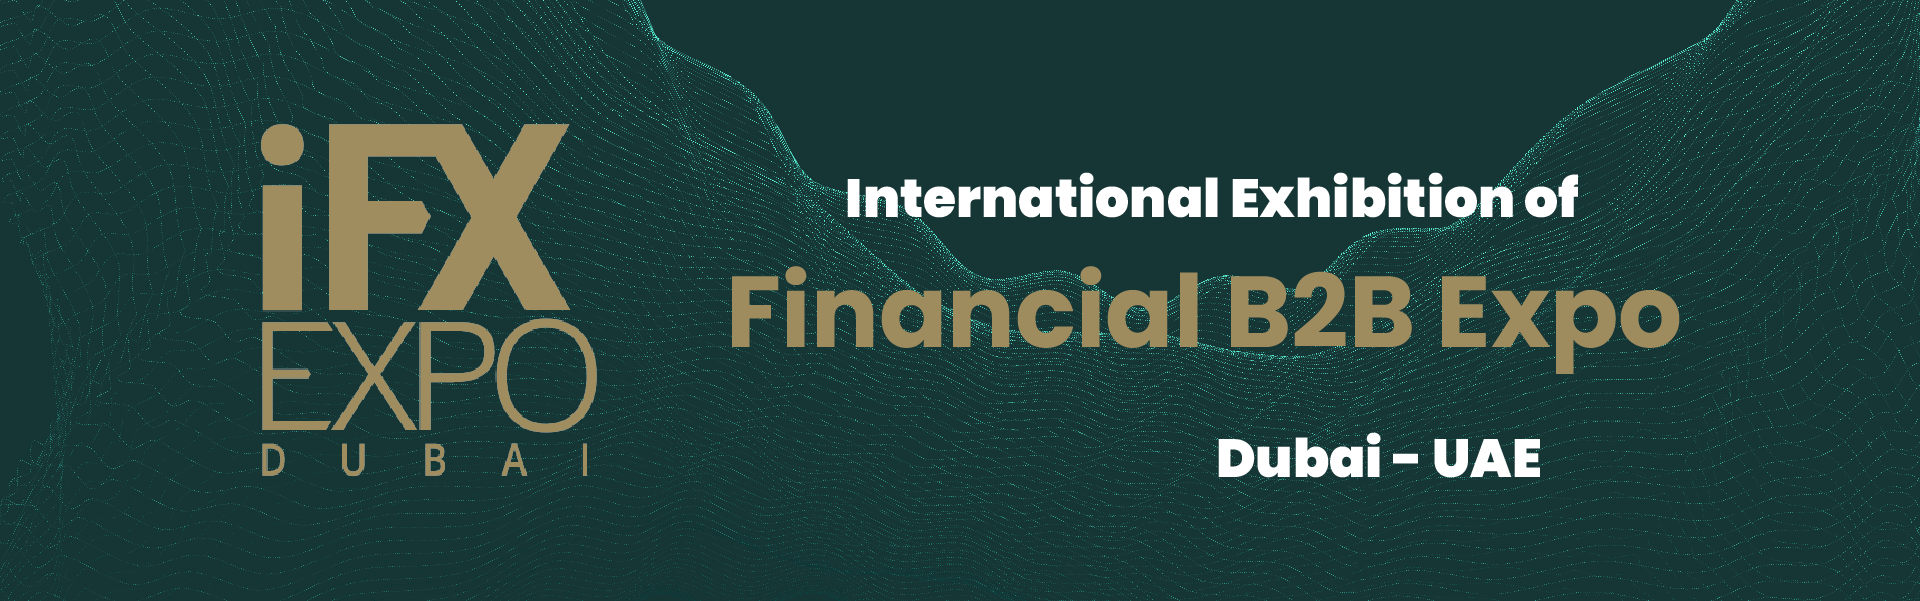 Dubai financial and business exhibition